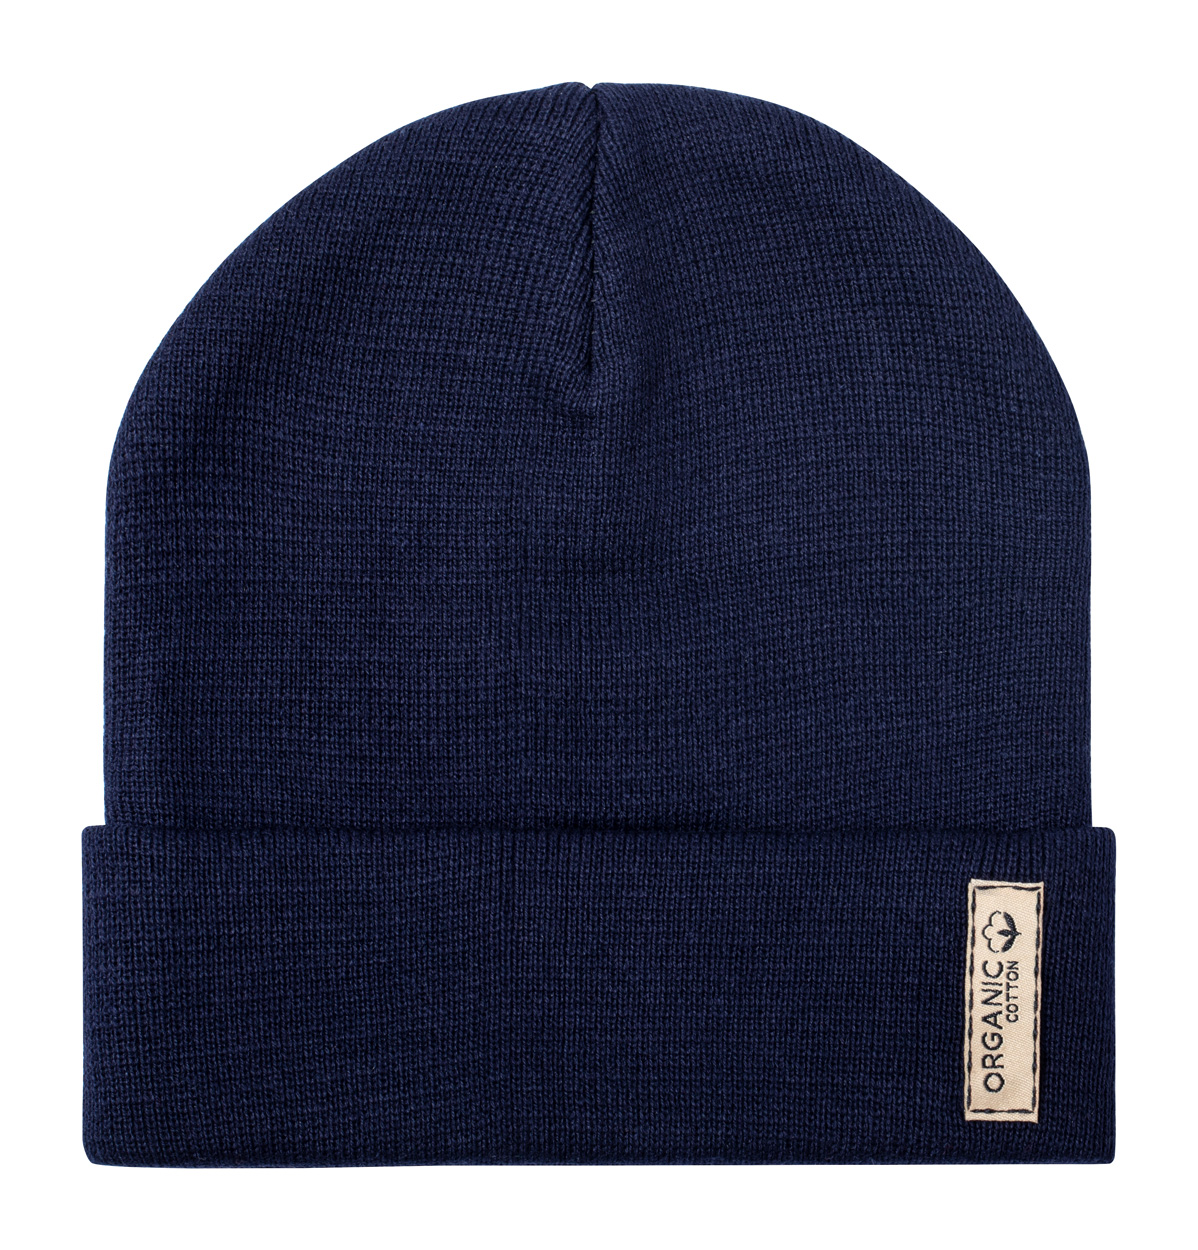 Daison organic cotton winter hat - blue